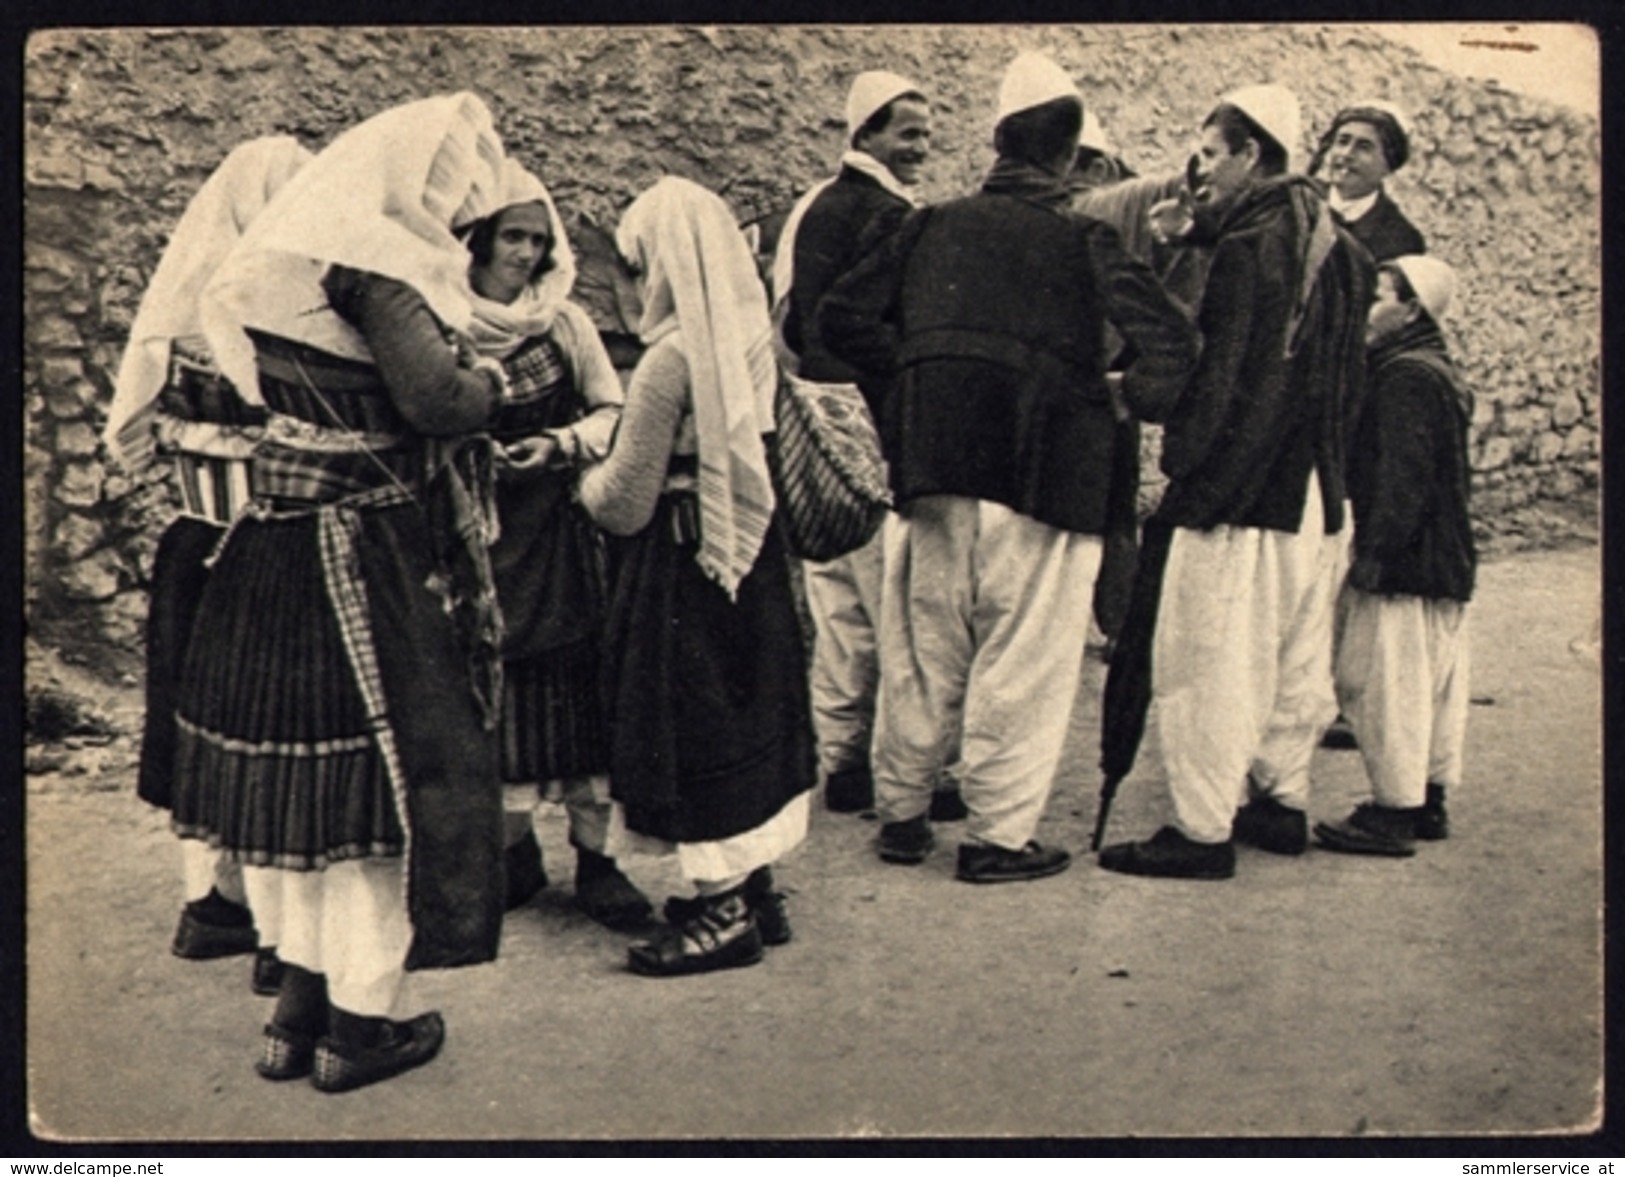 [000] Albanien / Albania, Skodër / Scutari, &ldquo;Kostume Të Zadrimës"  Um 1940 (gel. 1957), Edizioni DISTAPTUR (187) - Albanie